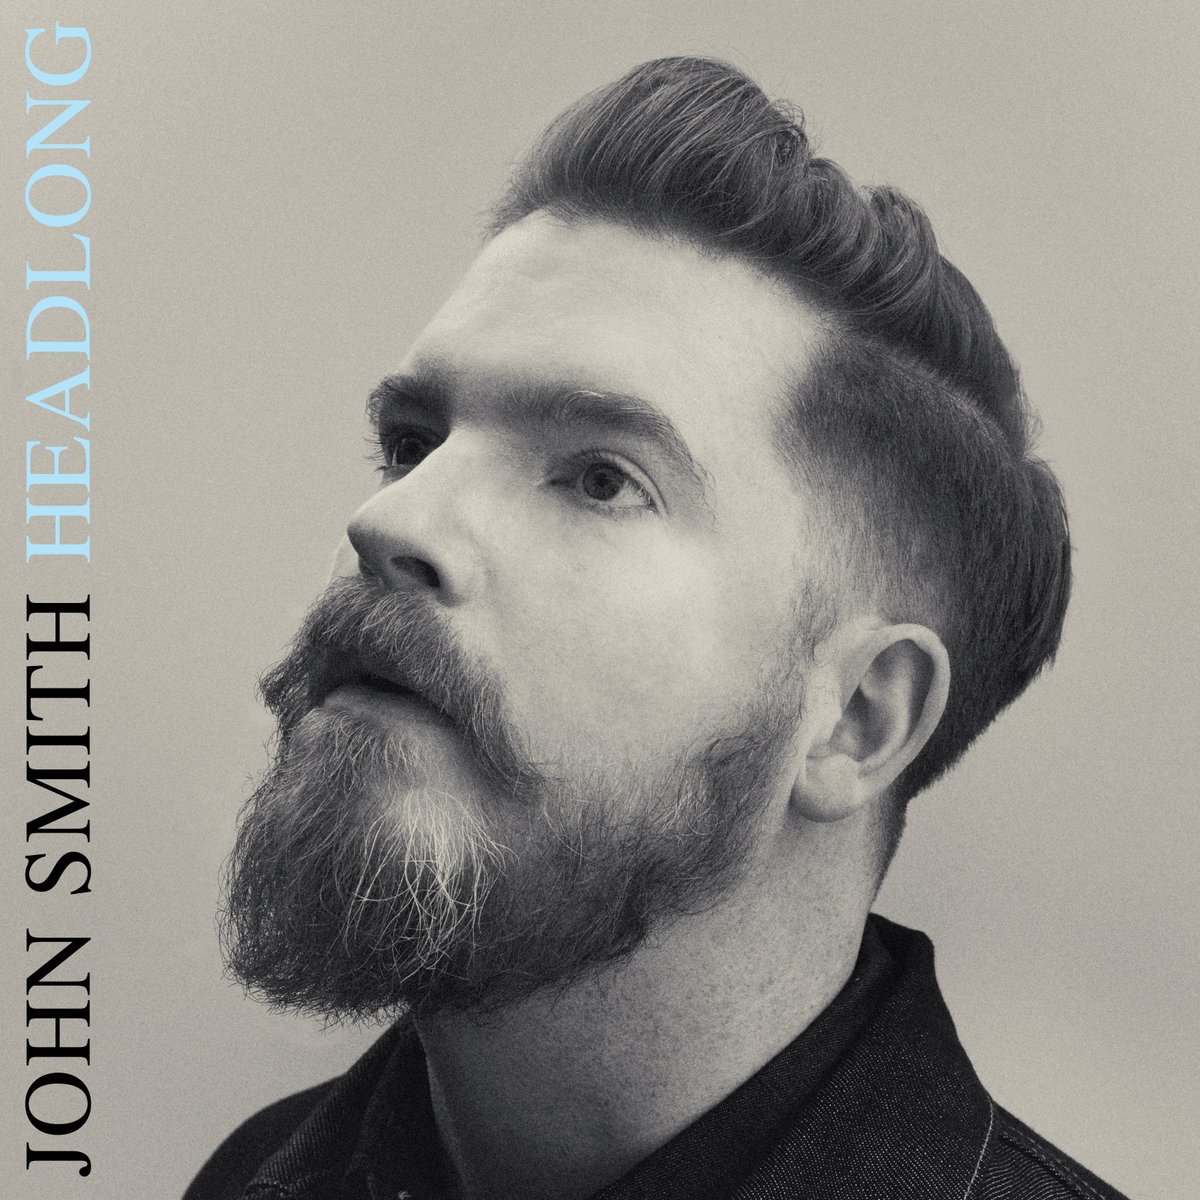 John Smith - Headlong (co-writer – Undone) image